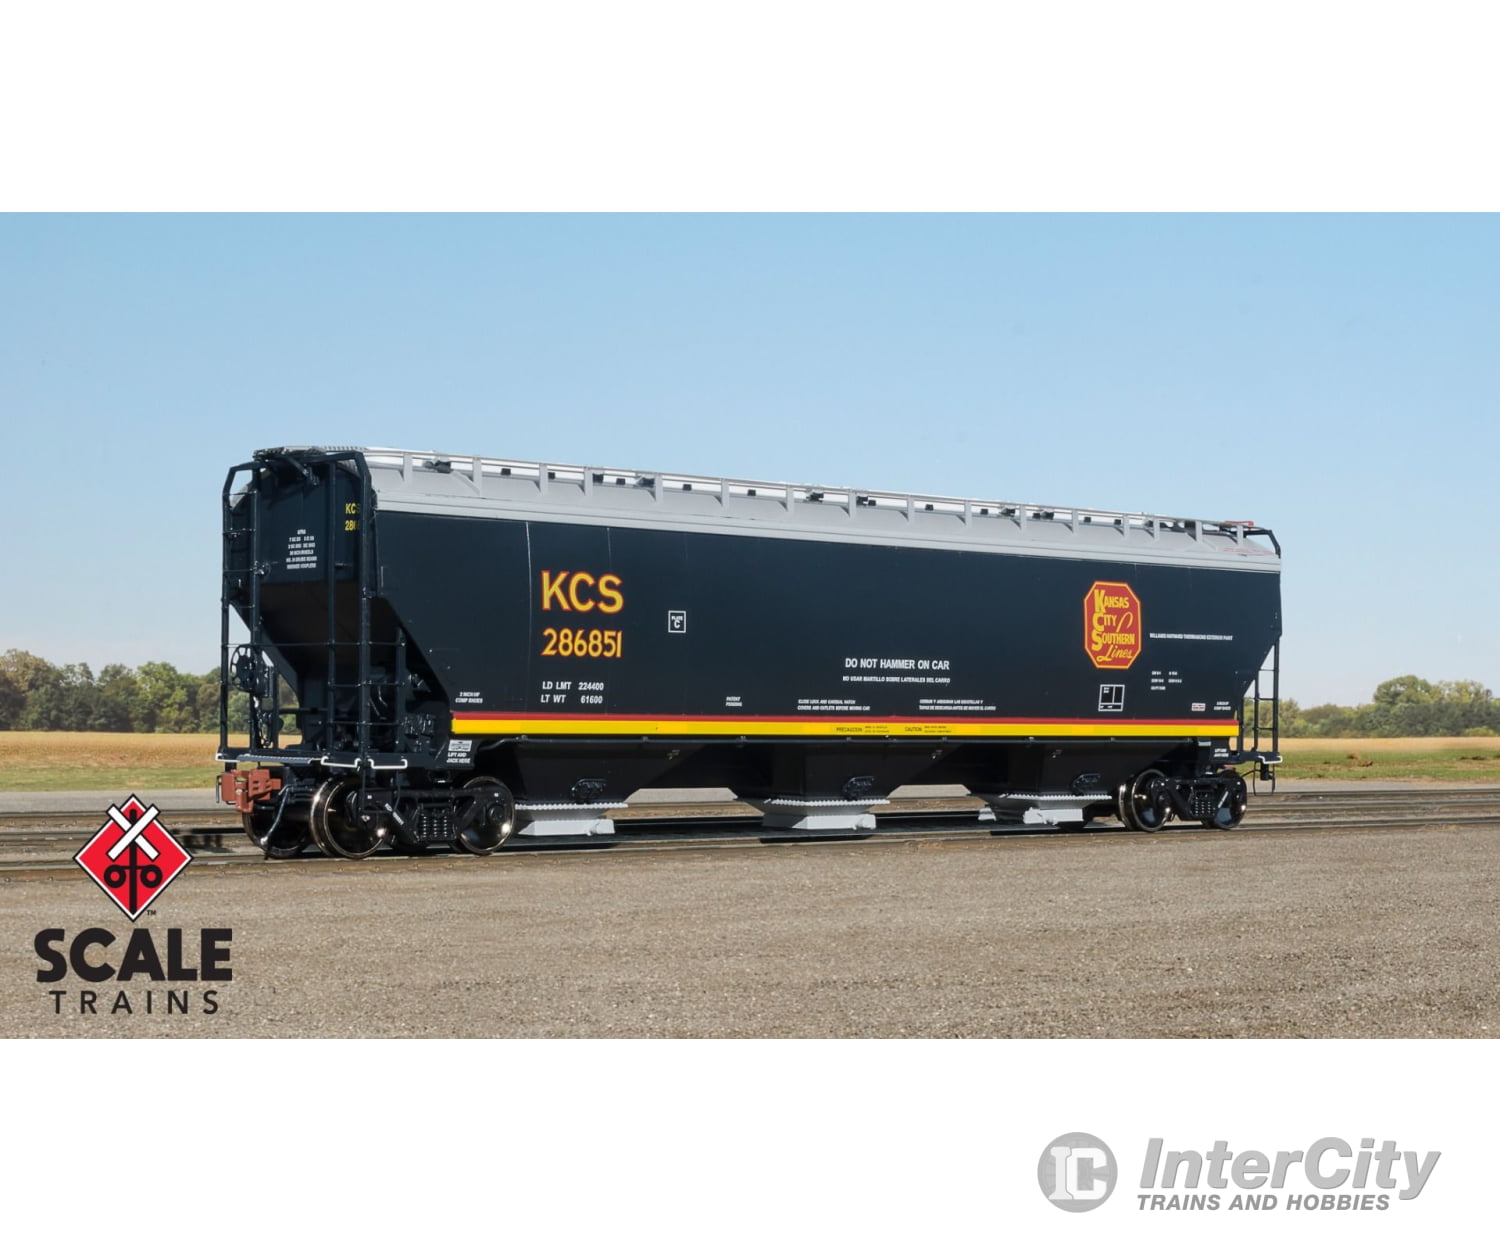 Scale Trains Sxt30802 Rivet Counter Ho Gunderson Covered Hopper Kansas City Southern - Belle Rd# Kcs